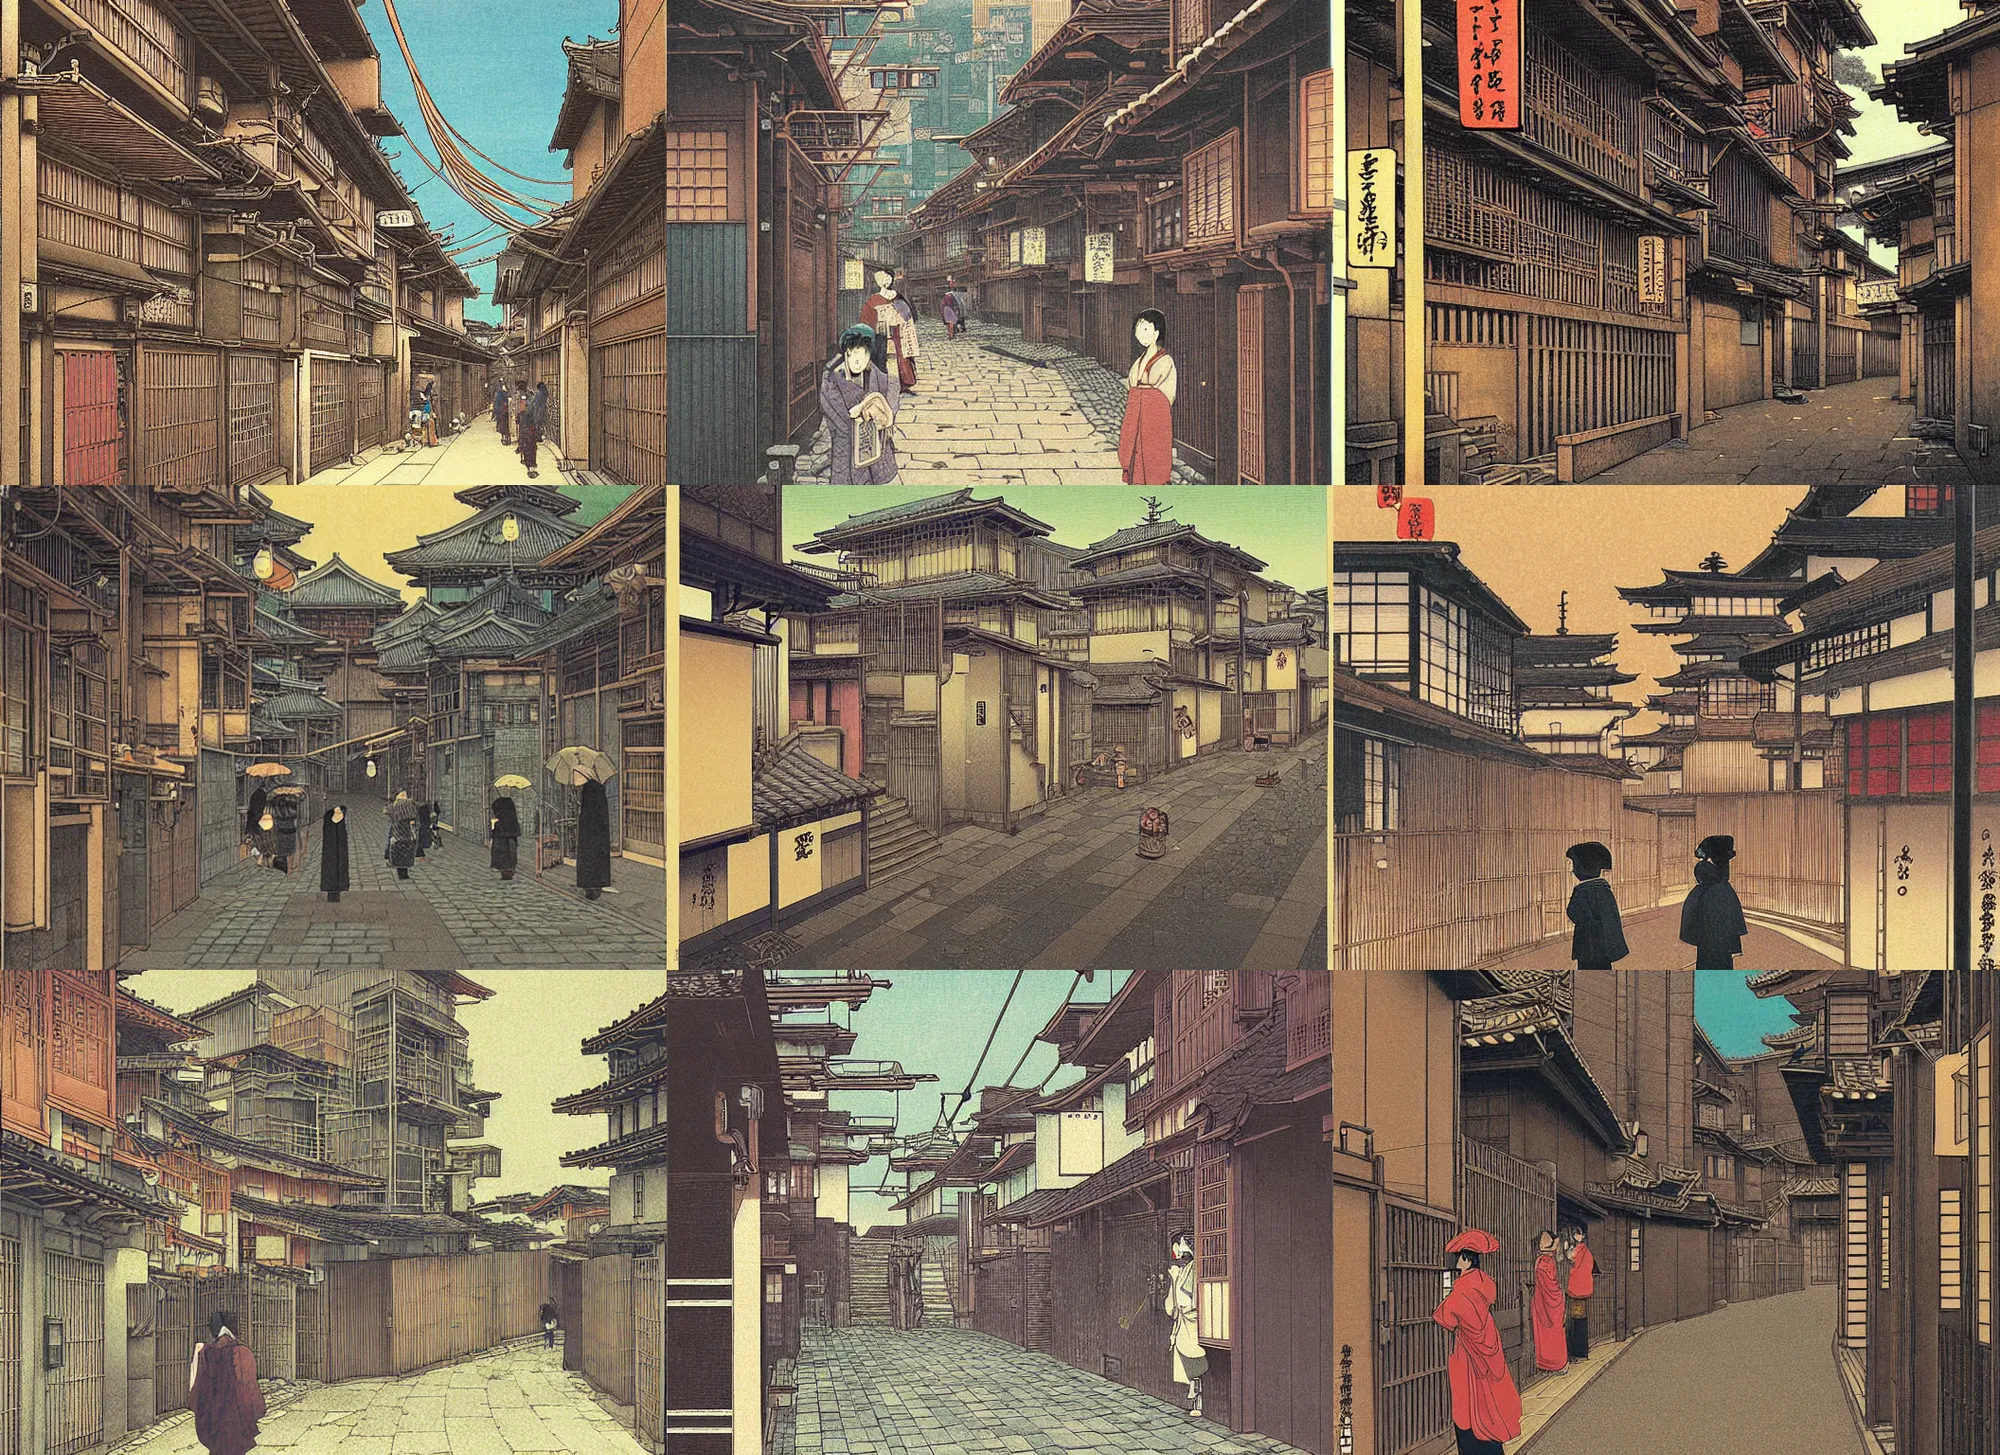 Prompt: a beautiful ukiyo painting of steampunk tokyo alleyway by hasui kawase, takato yomamoto